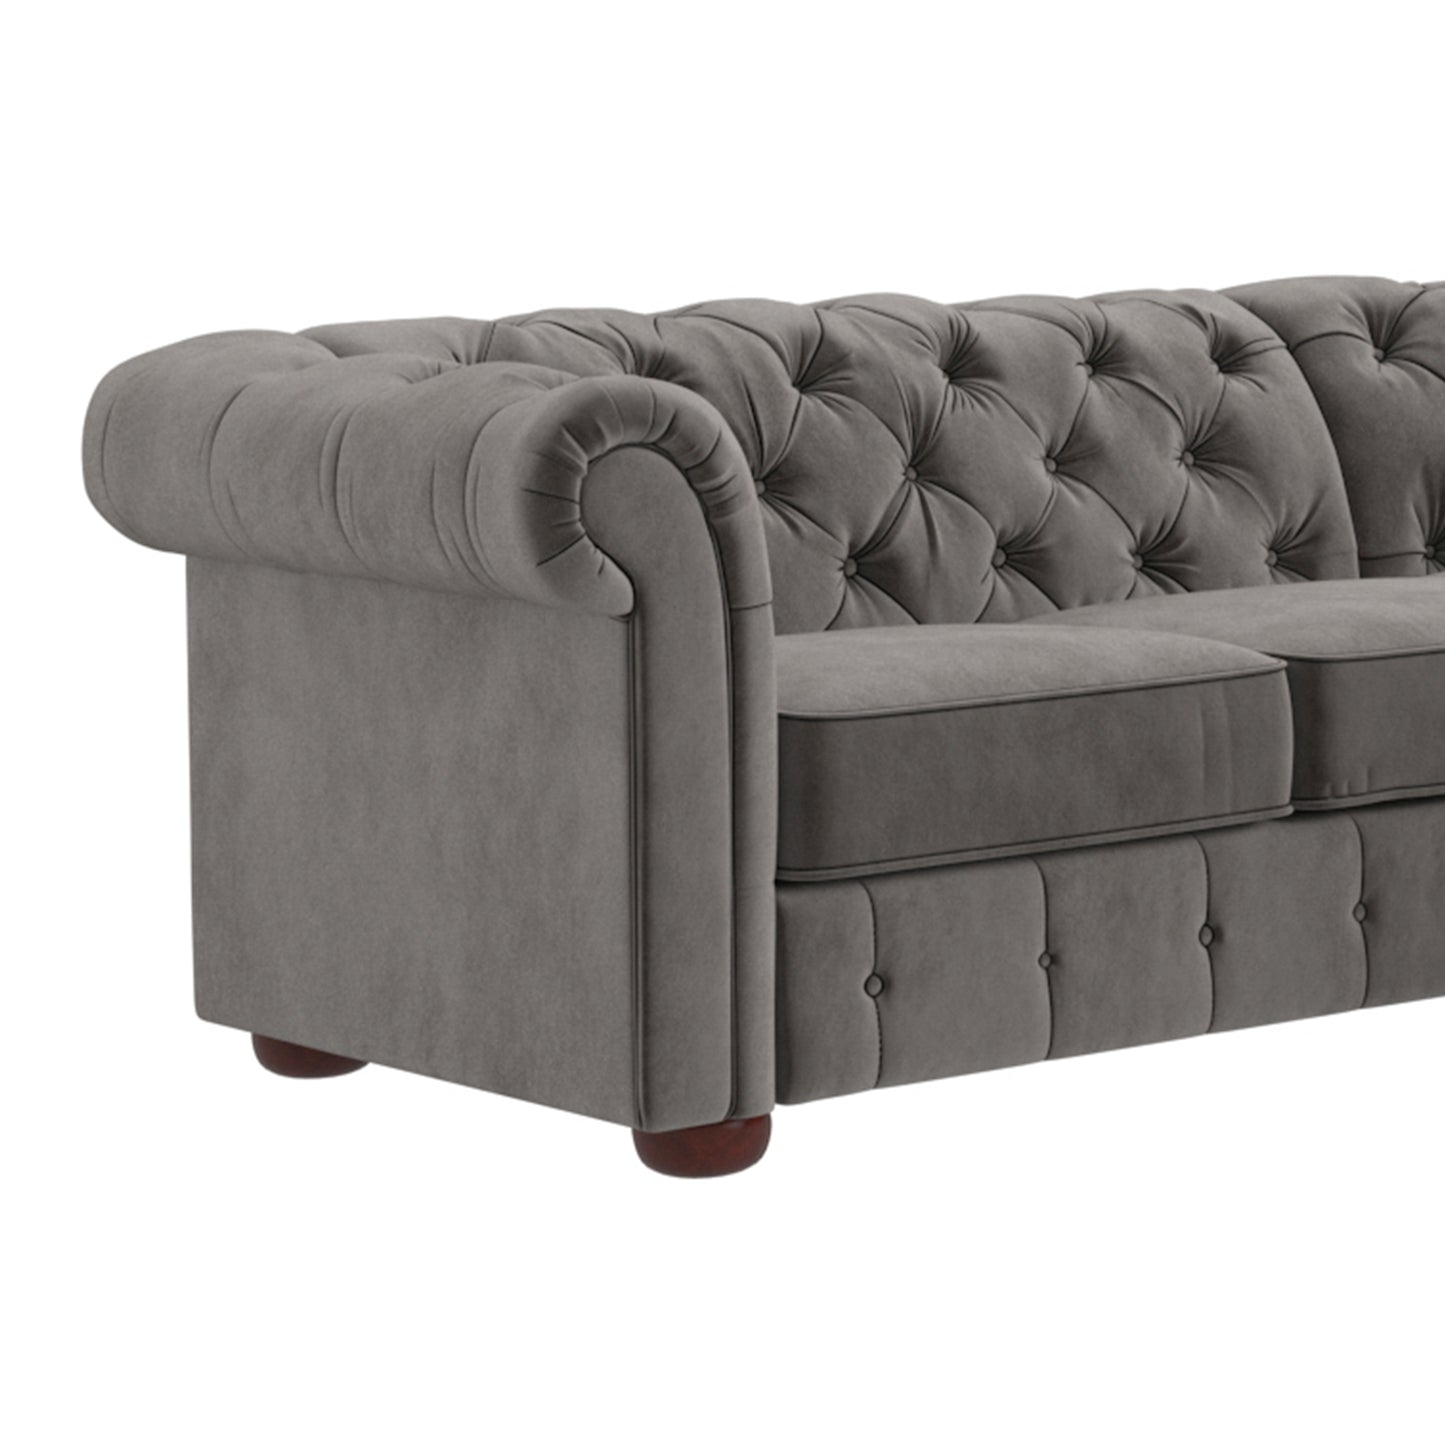 7-Seat L-Shaped Chesterfield Sectional Sofa - Dark Grey Velvet